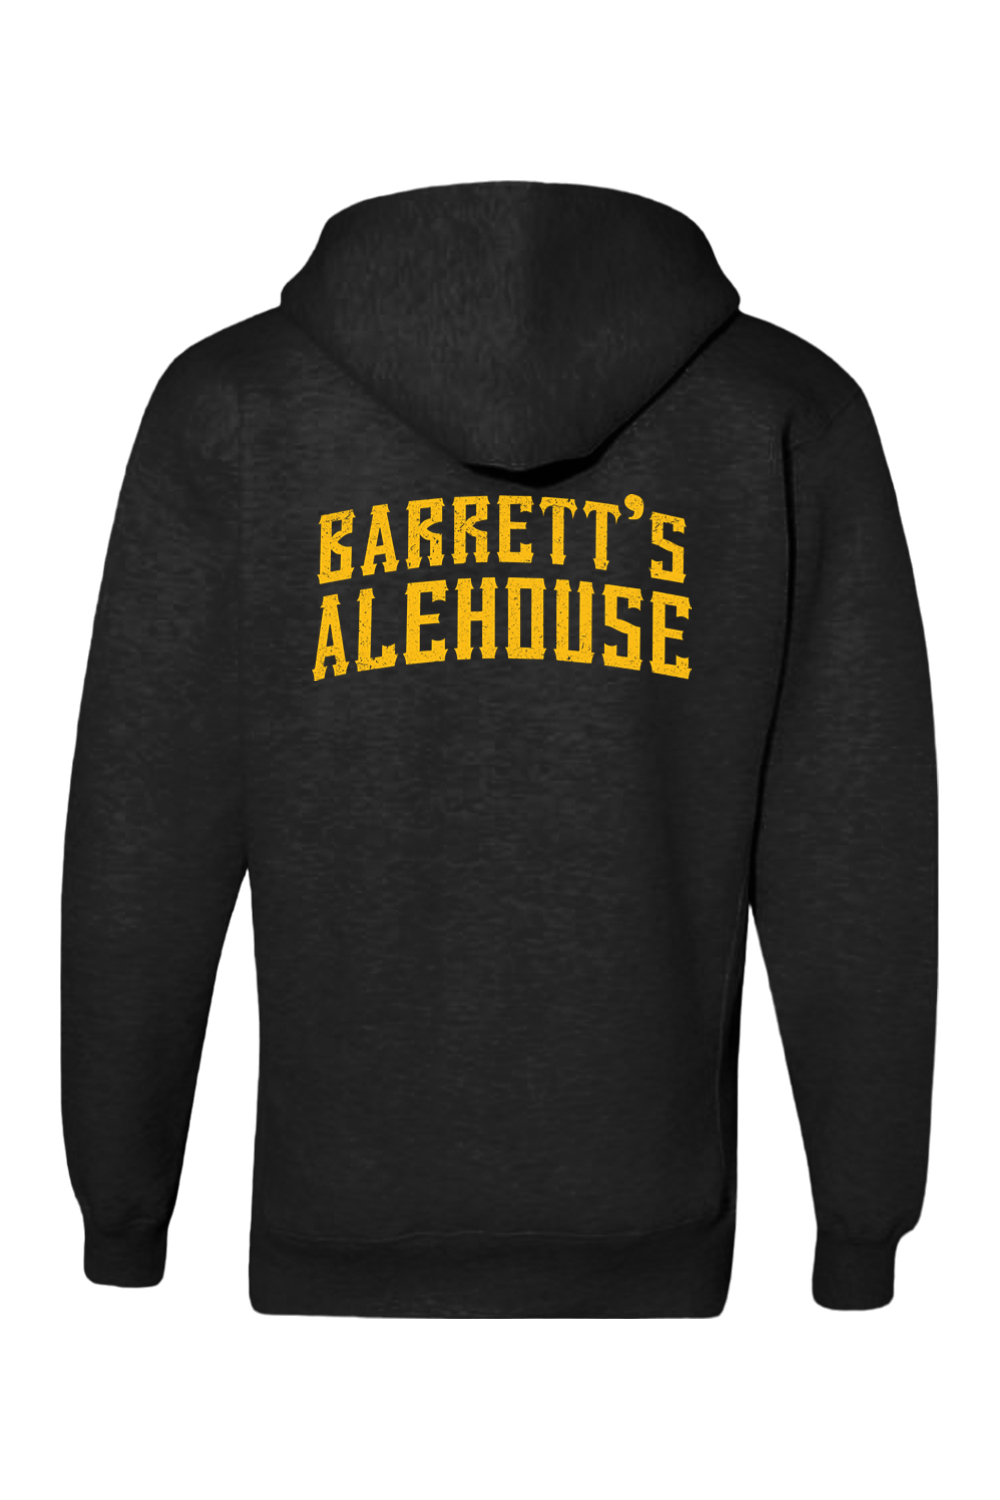 Barrett's Alehouse Black & Gold Sport Lace Hoodie